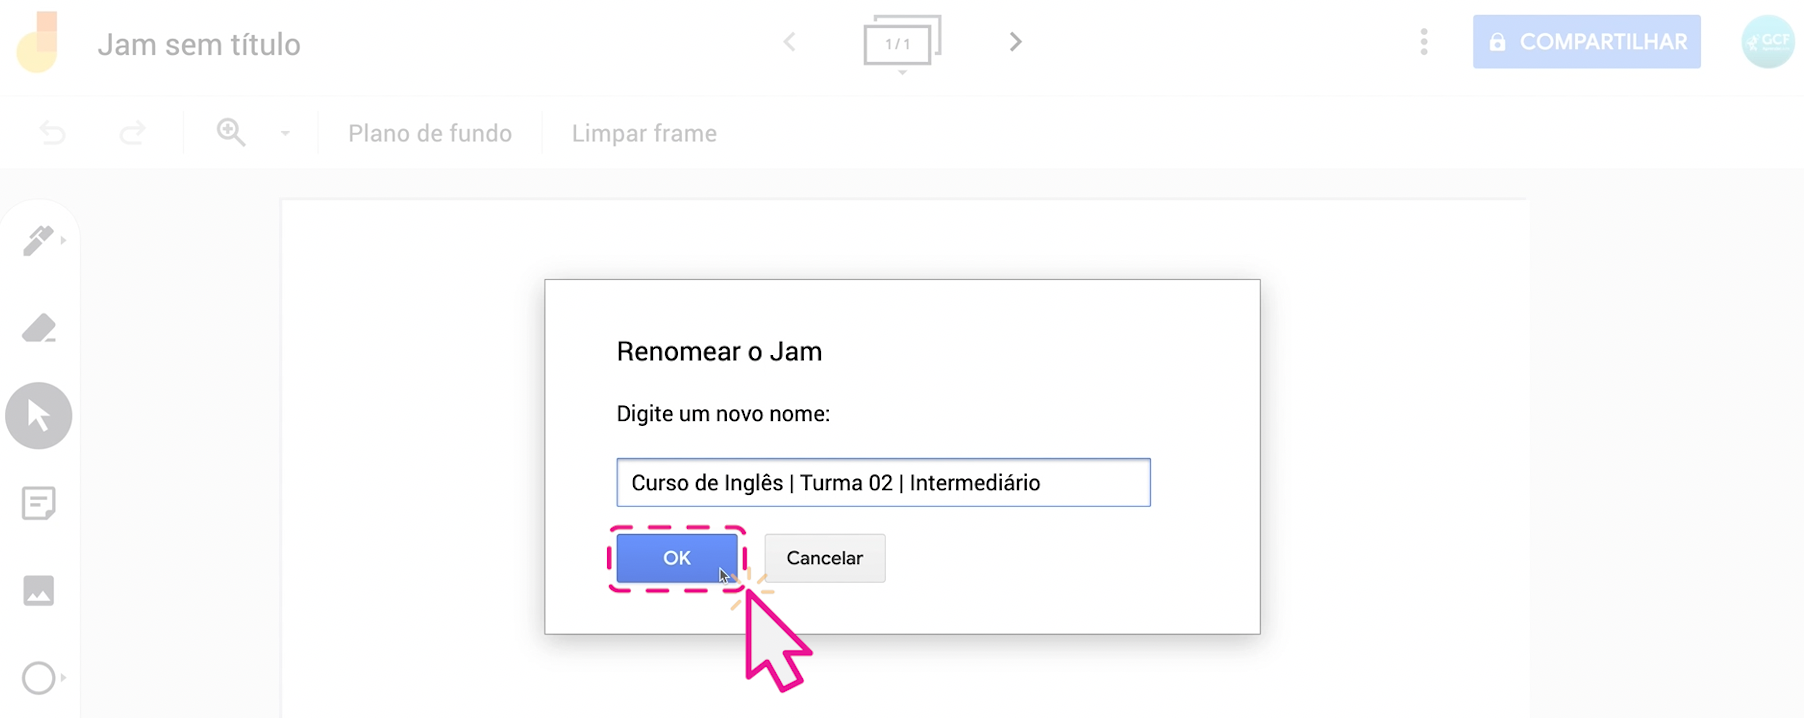 Como usar o Jamboard, o quadro do Google 4